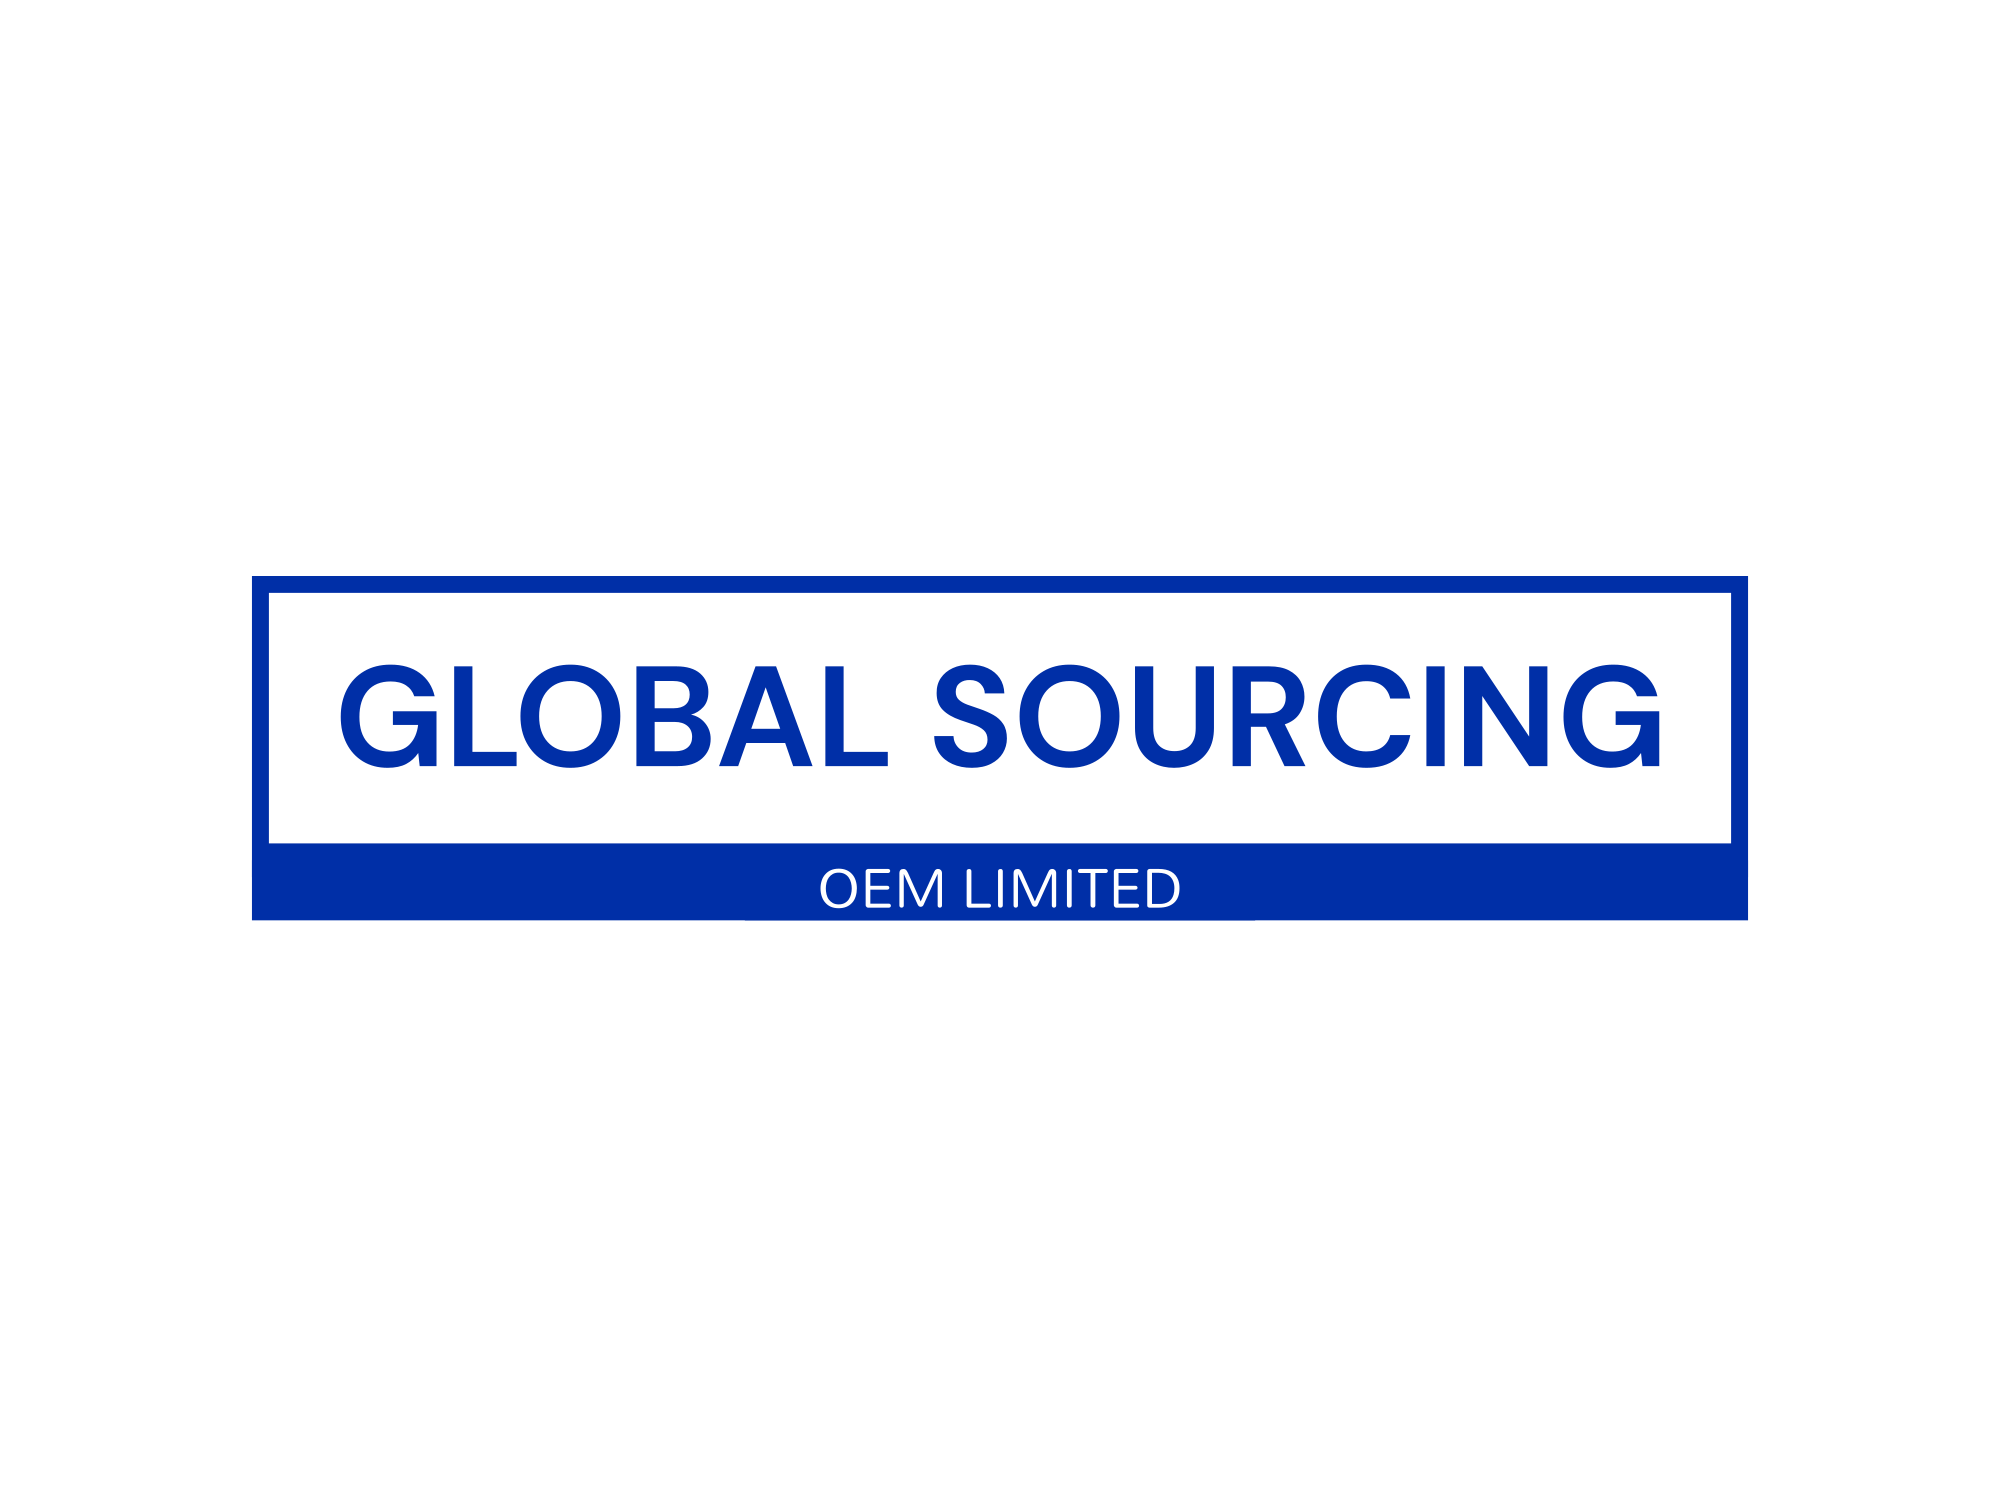 Global Sourcing OEM Limited